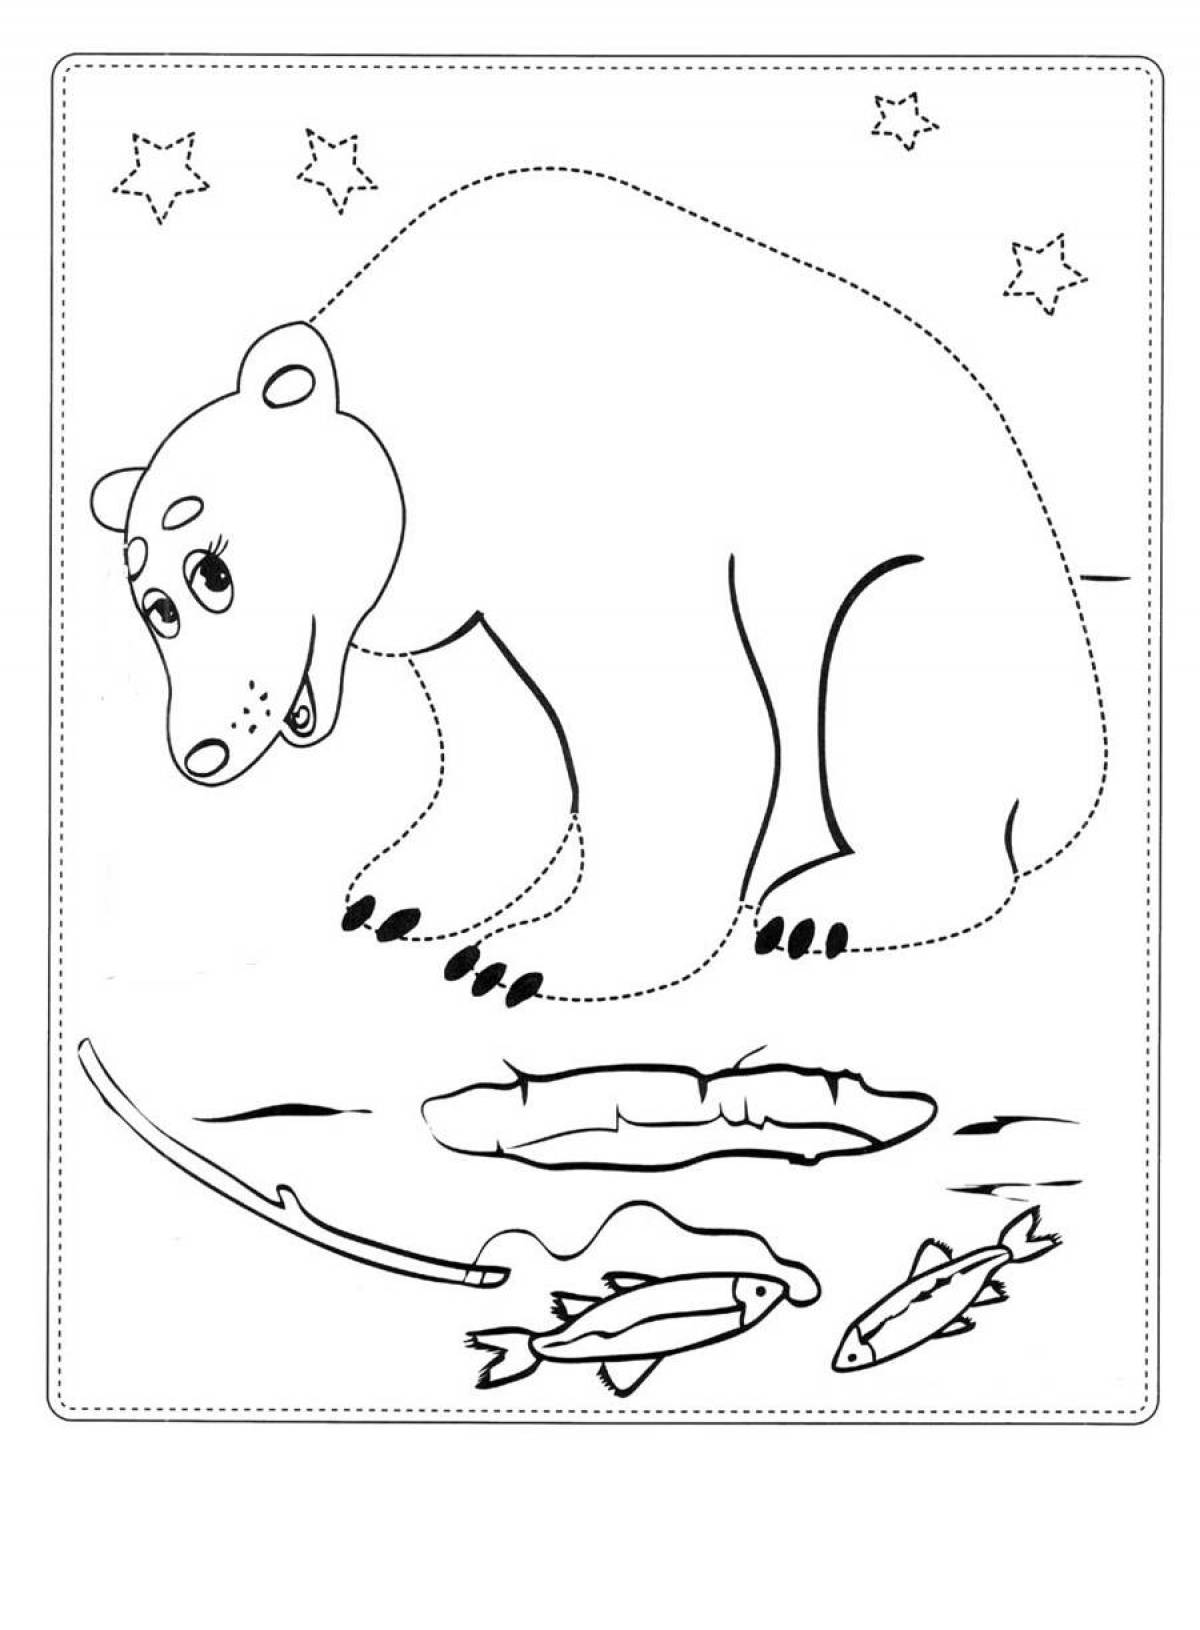 Delightful umka coloring book for kids